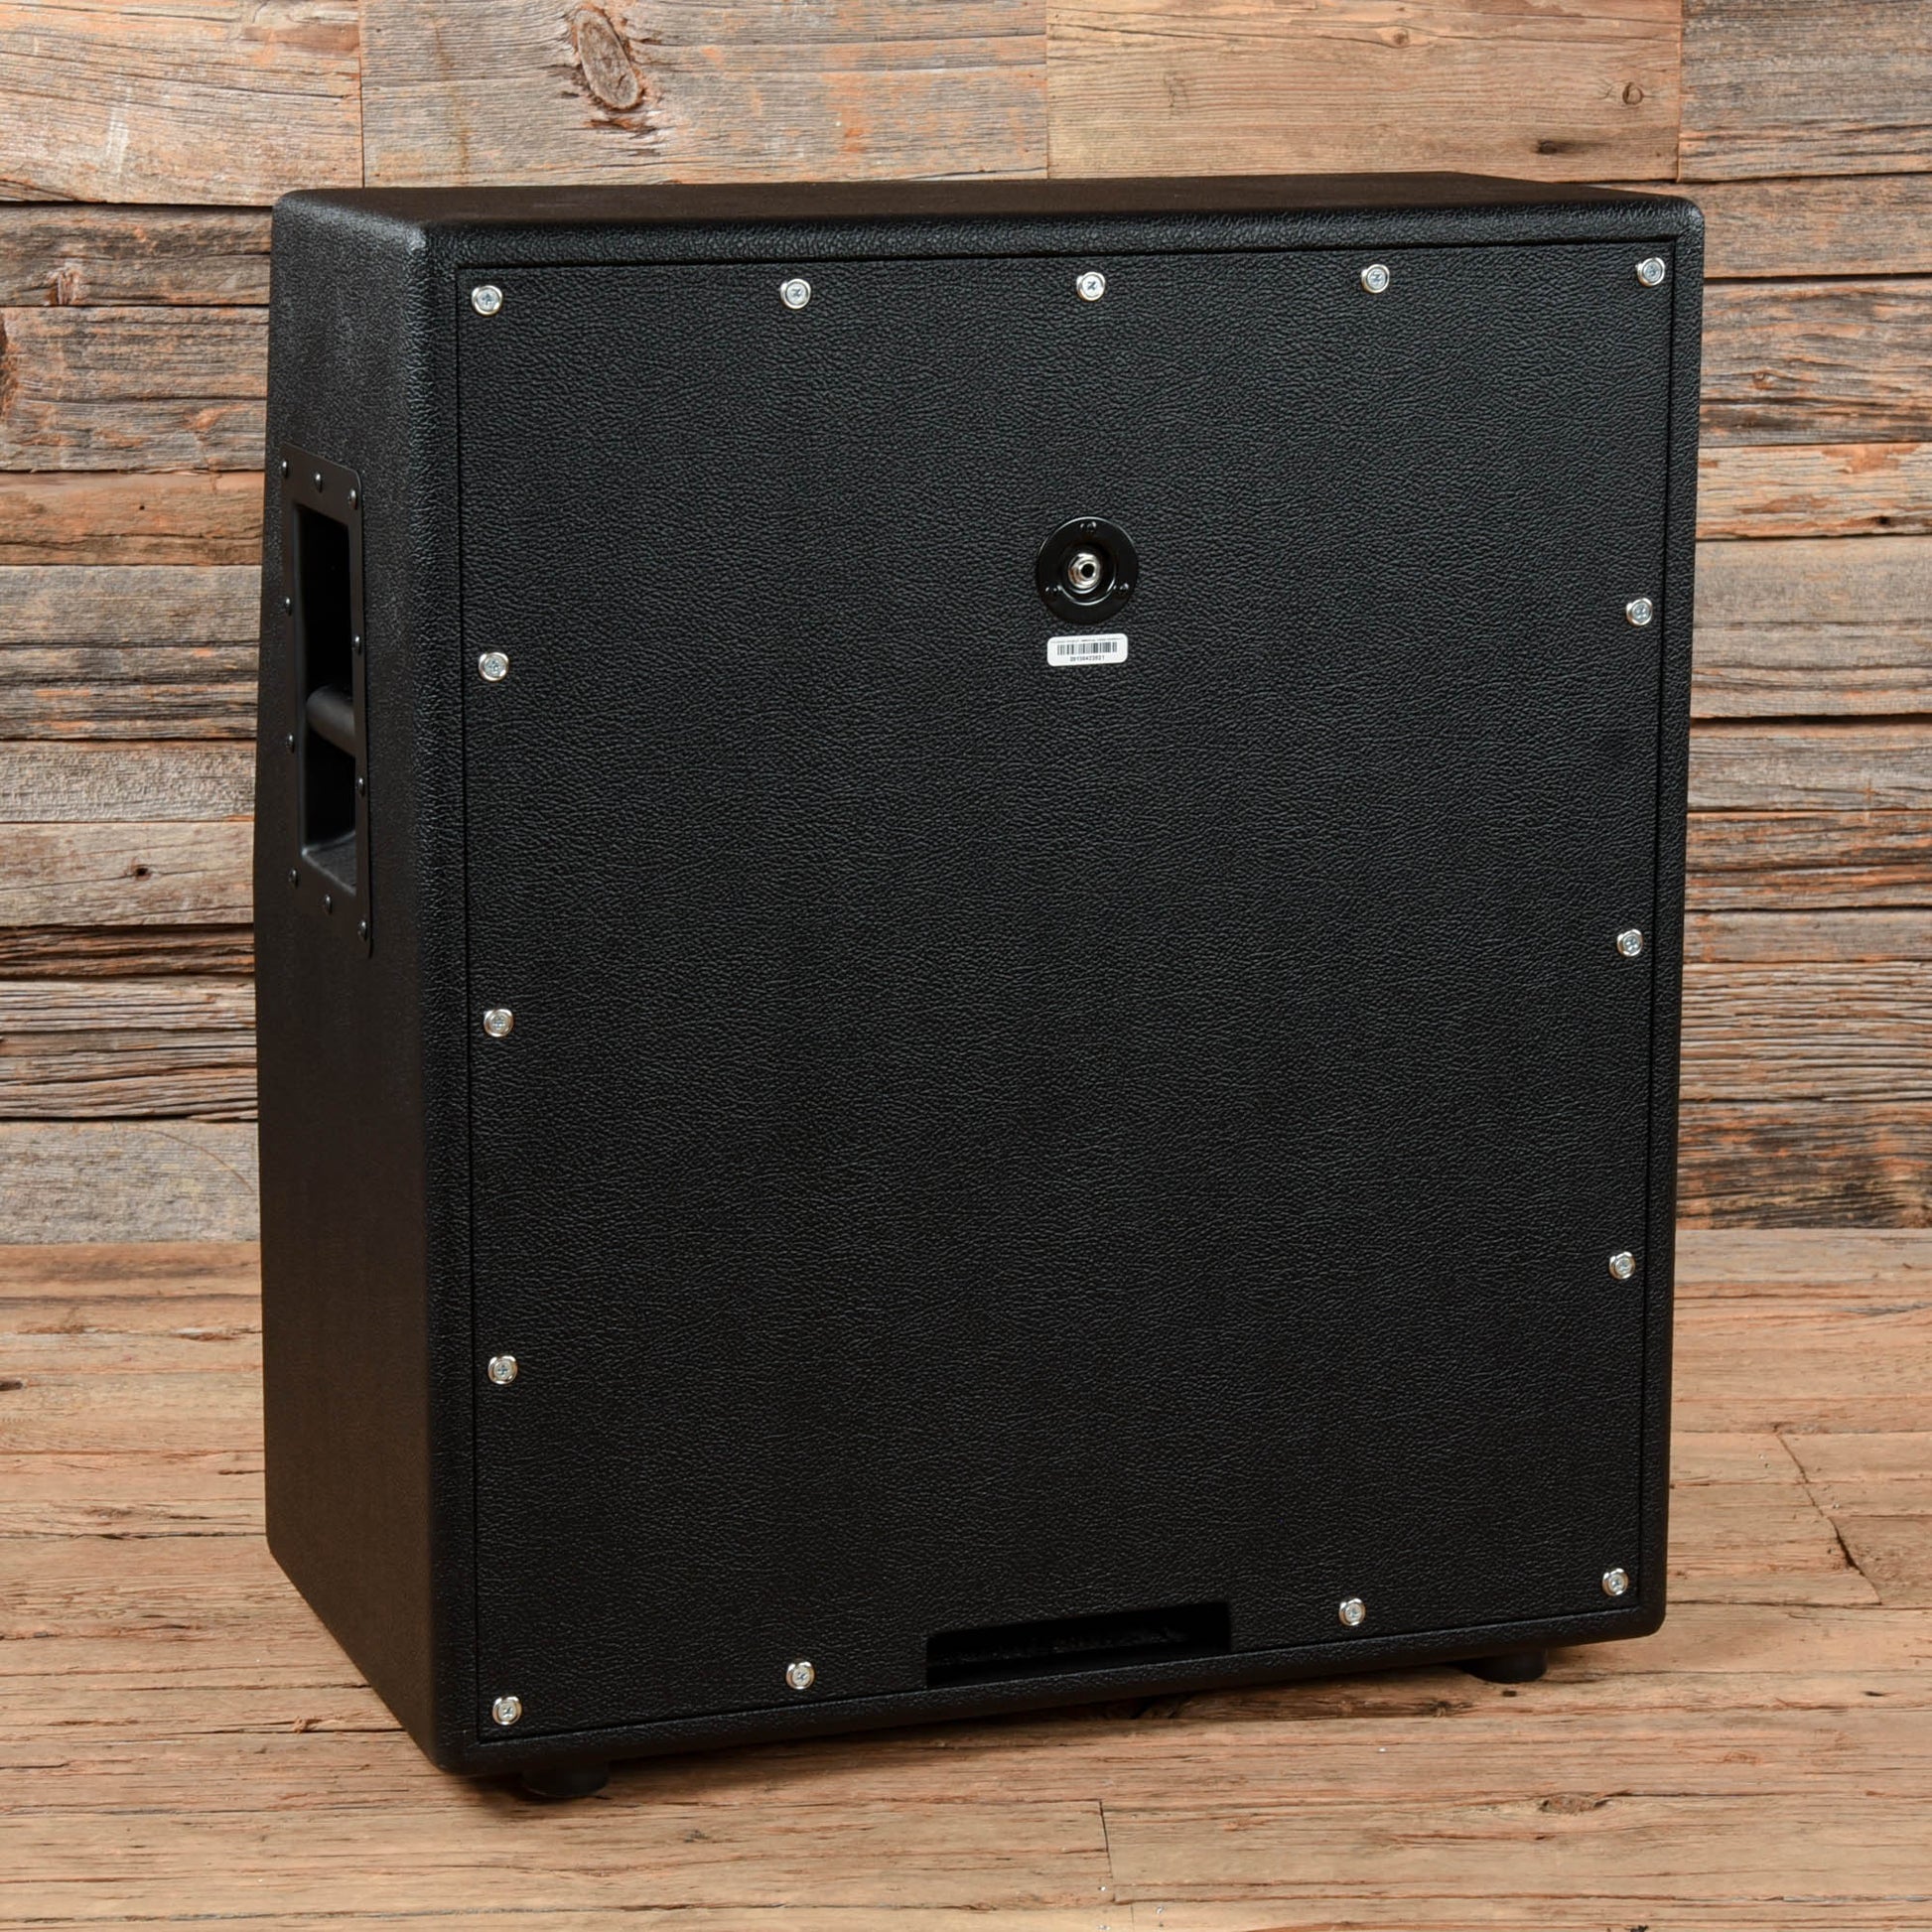 Soldano 2x12" Vertical Guitar Speaker Cab Amps / Guitar Cabinets